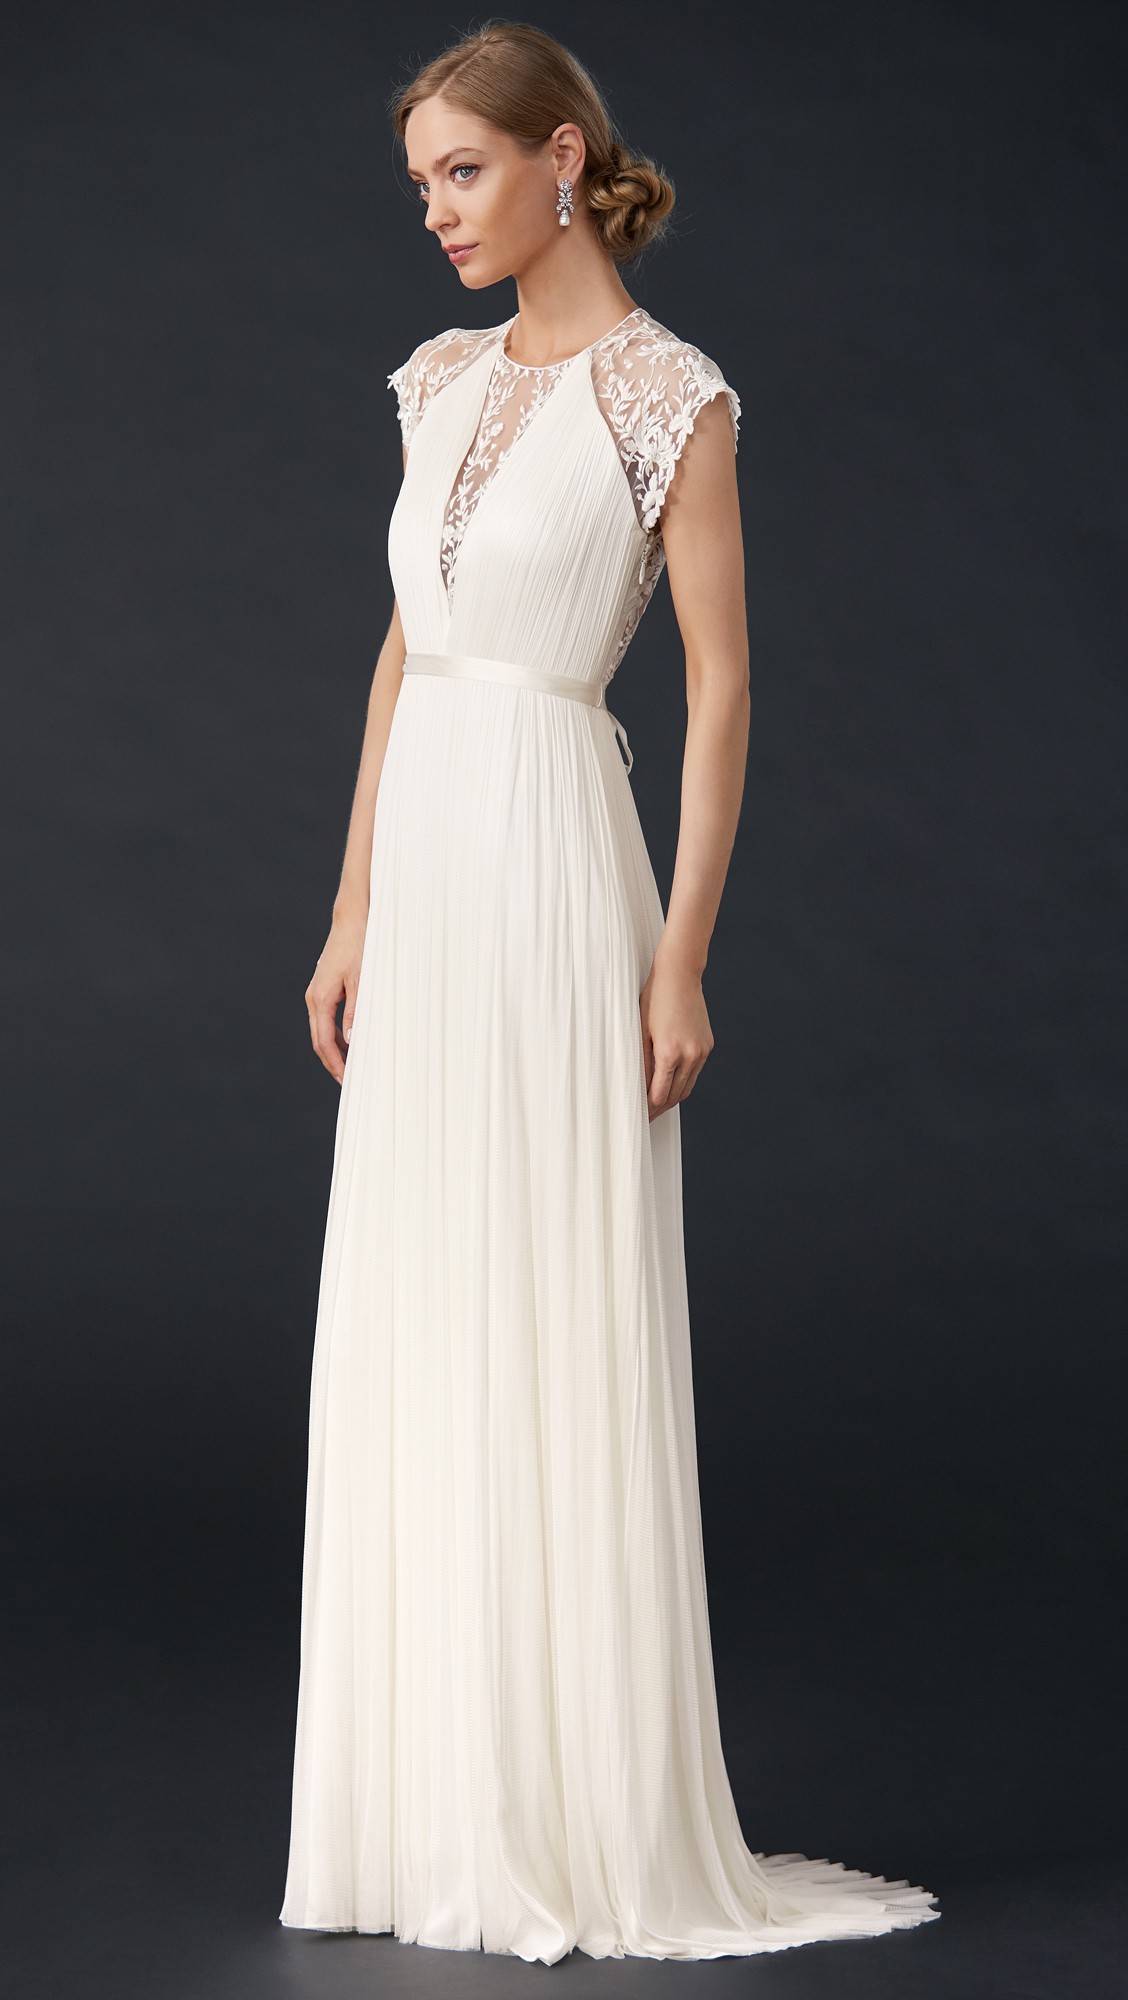 Catherine Deane Zoe New Wedding Dress Save 57% - Stillwhite